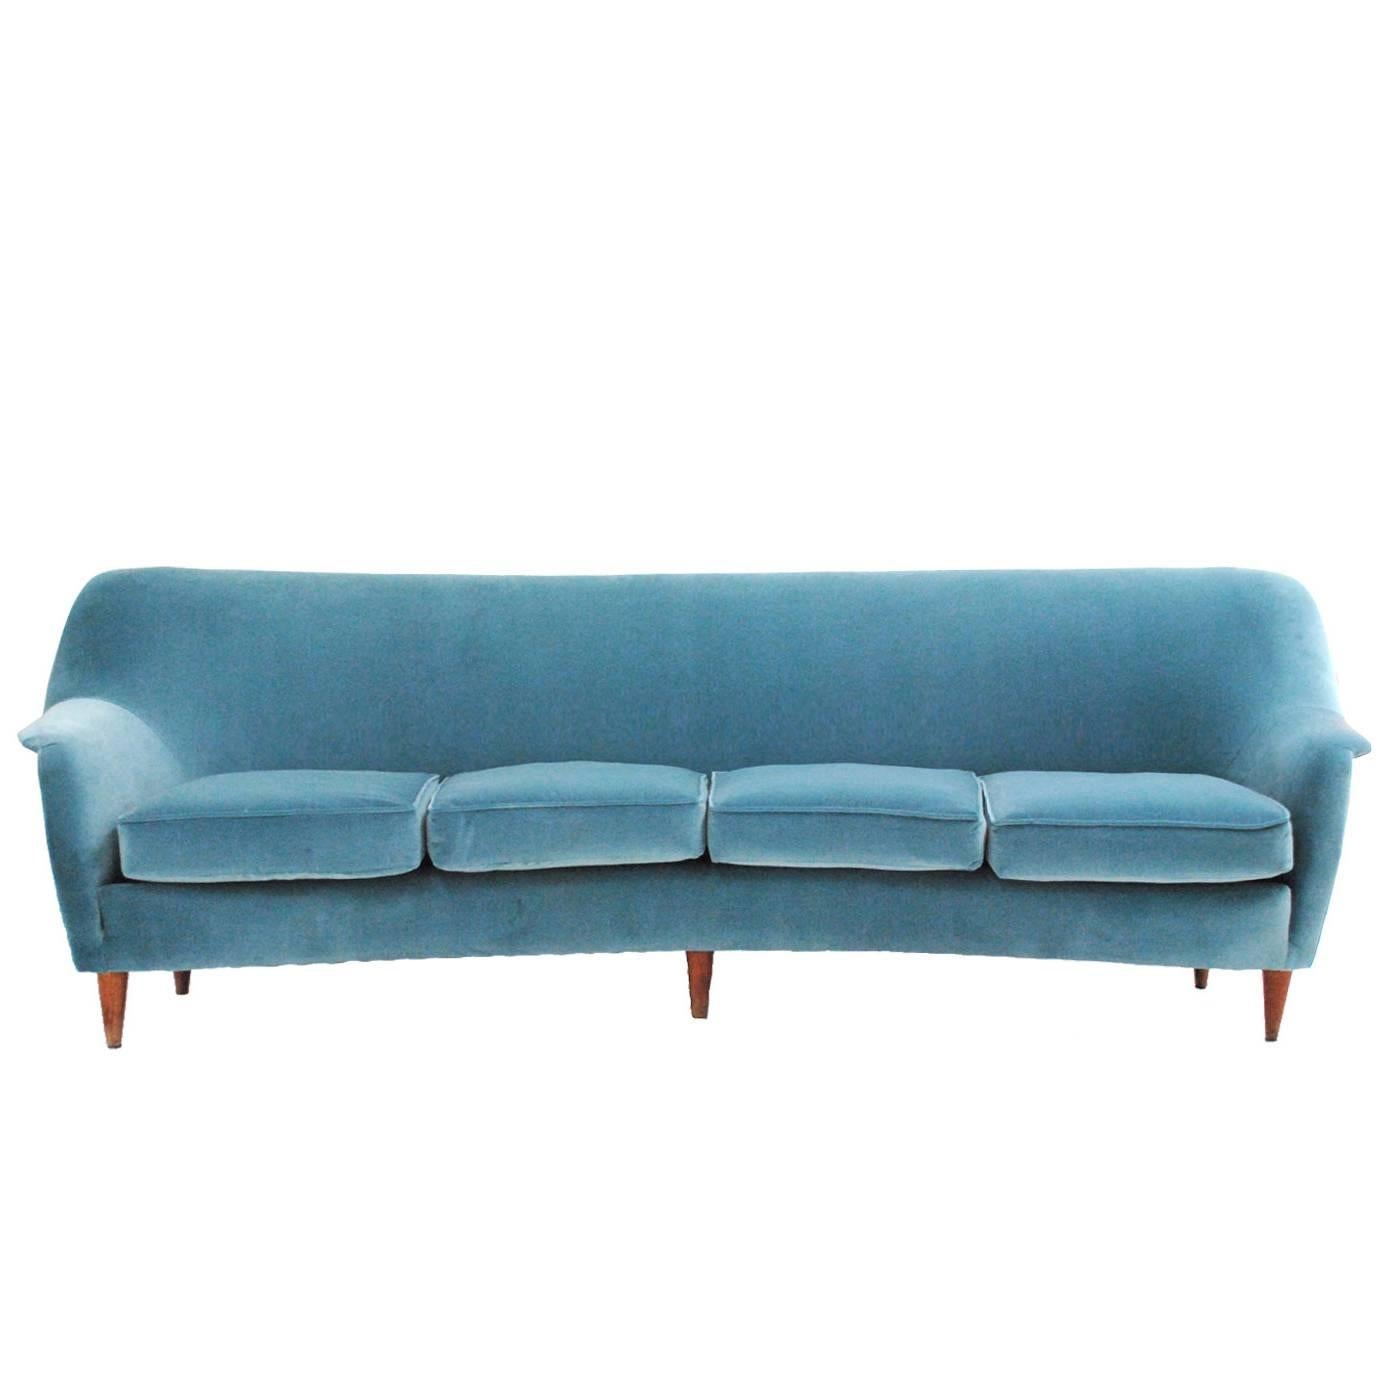 Midcentury Curved Sofa